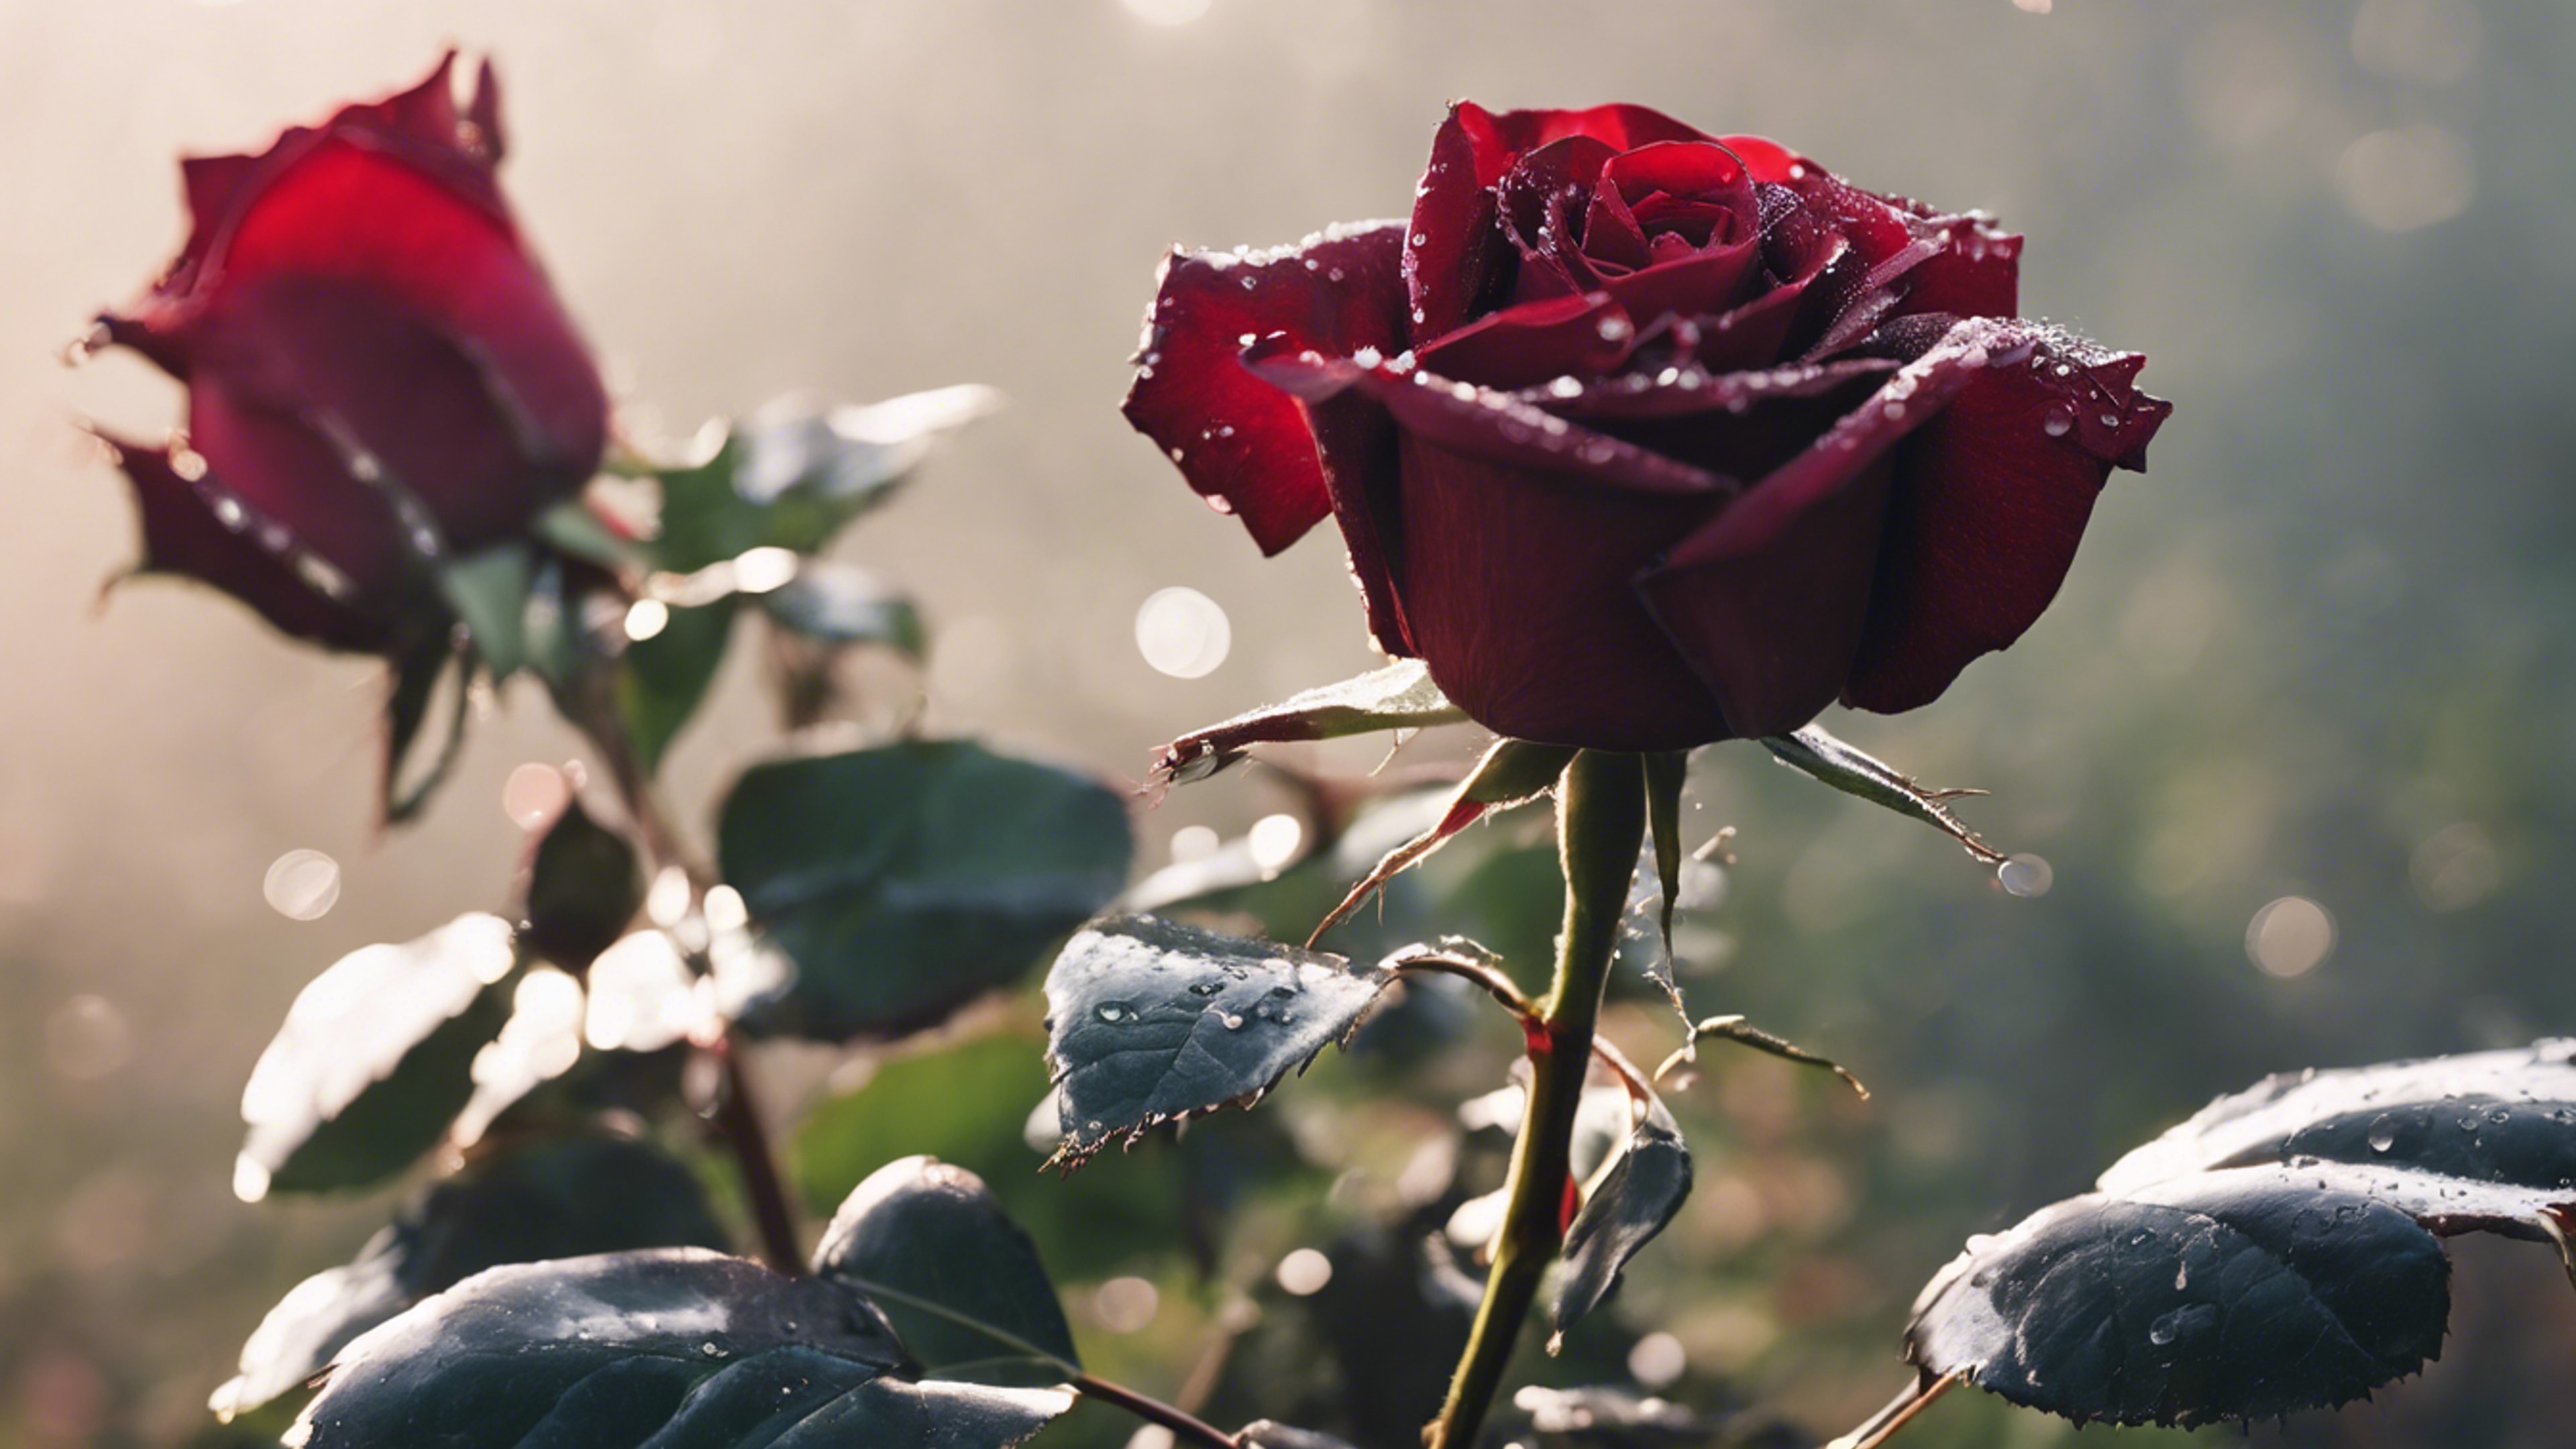 A lush dark red rose in full bloom, glistening with morning dew. Tapéta[3308270db75d4dd78aa2]